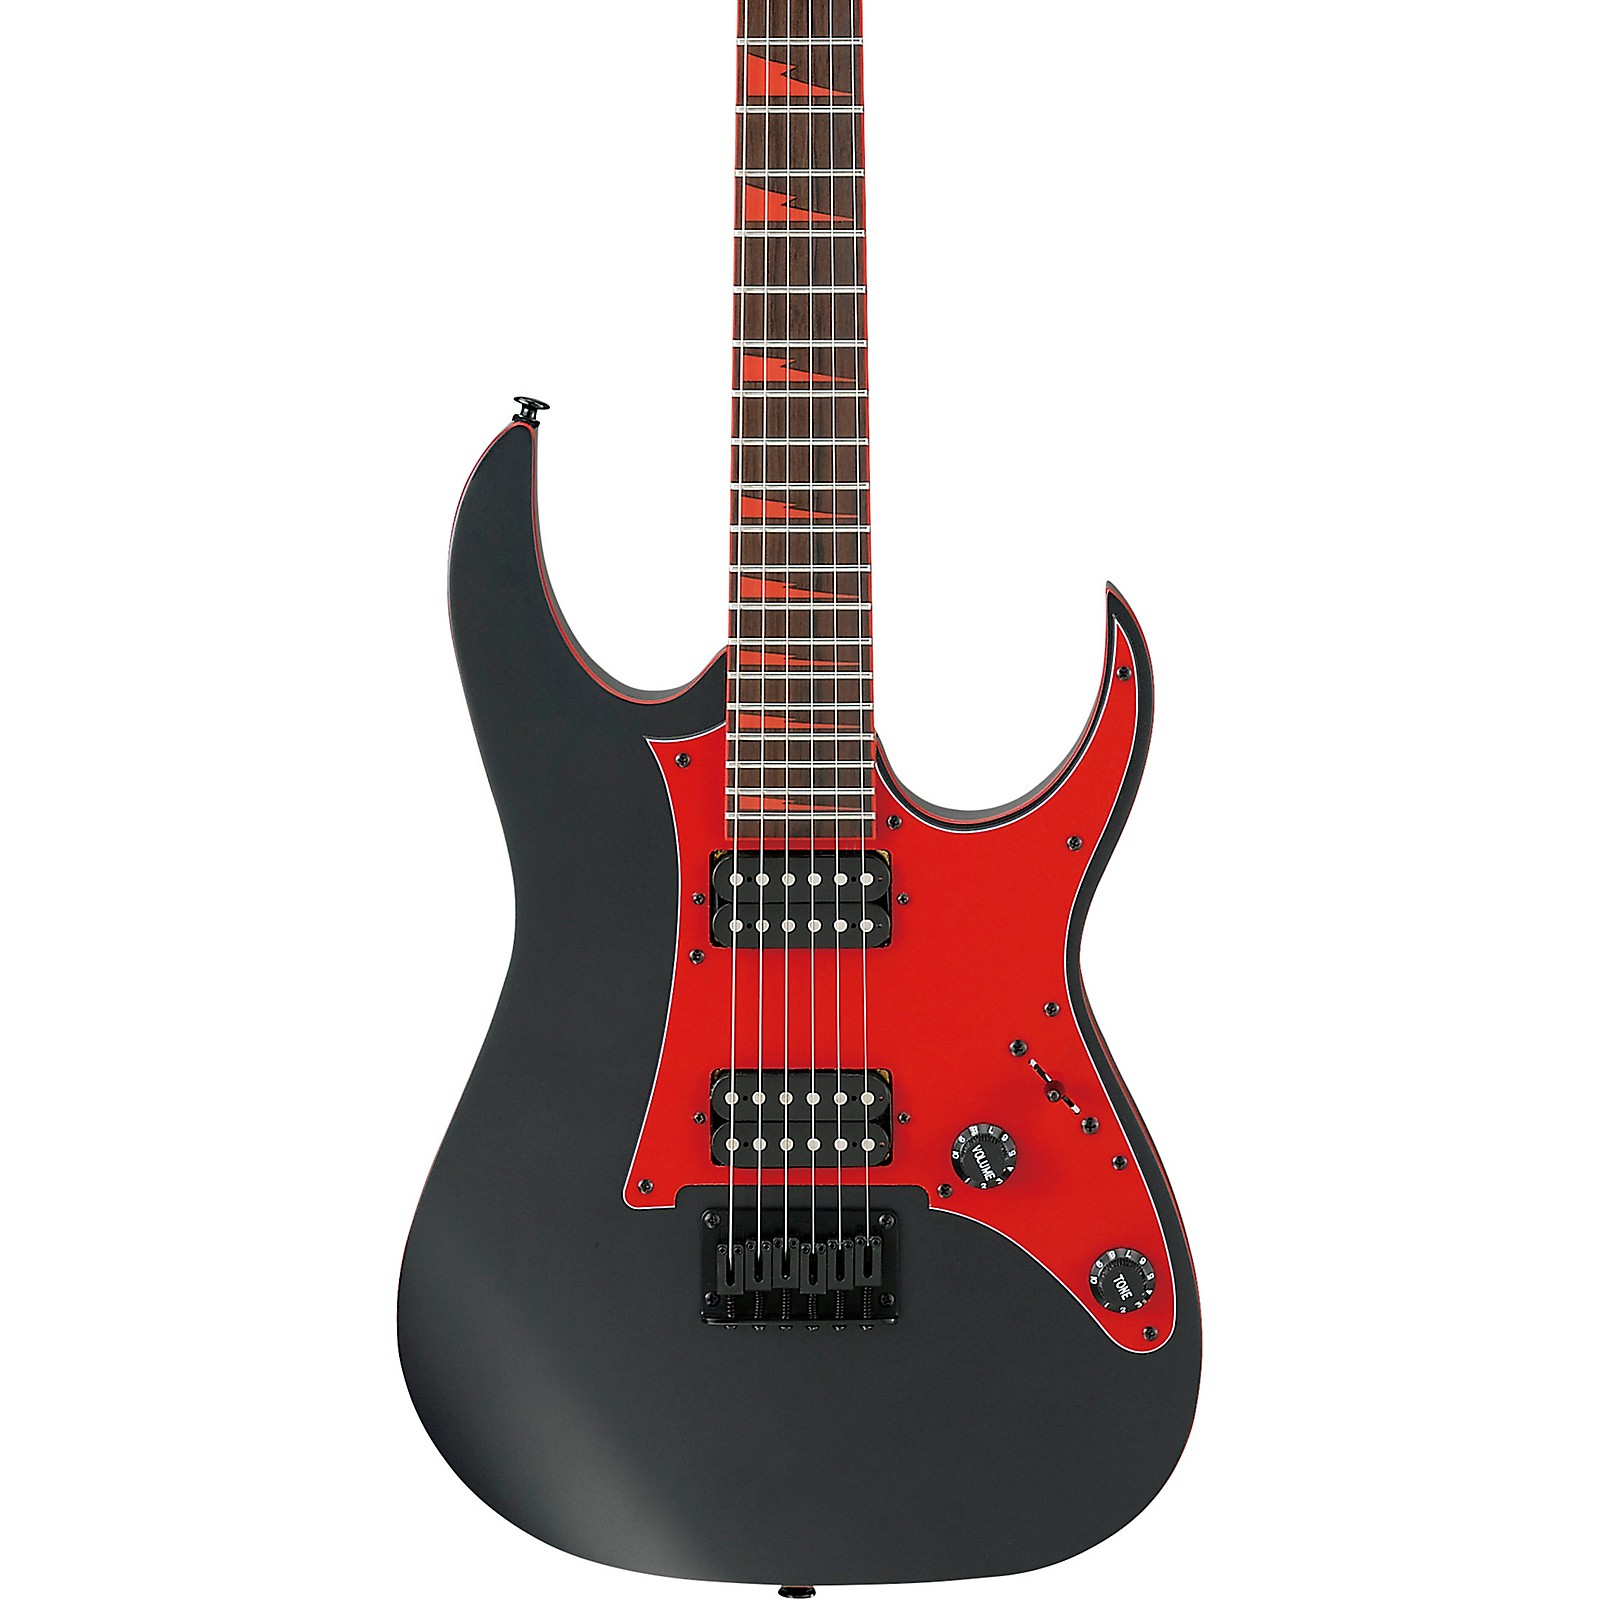 Ibanez GRG131DX GRG Series Electric Guitar Flat Black